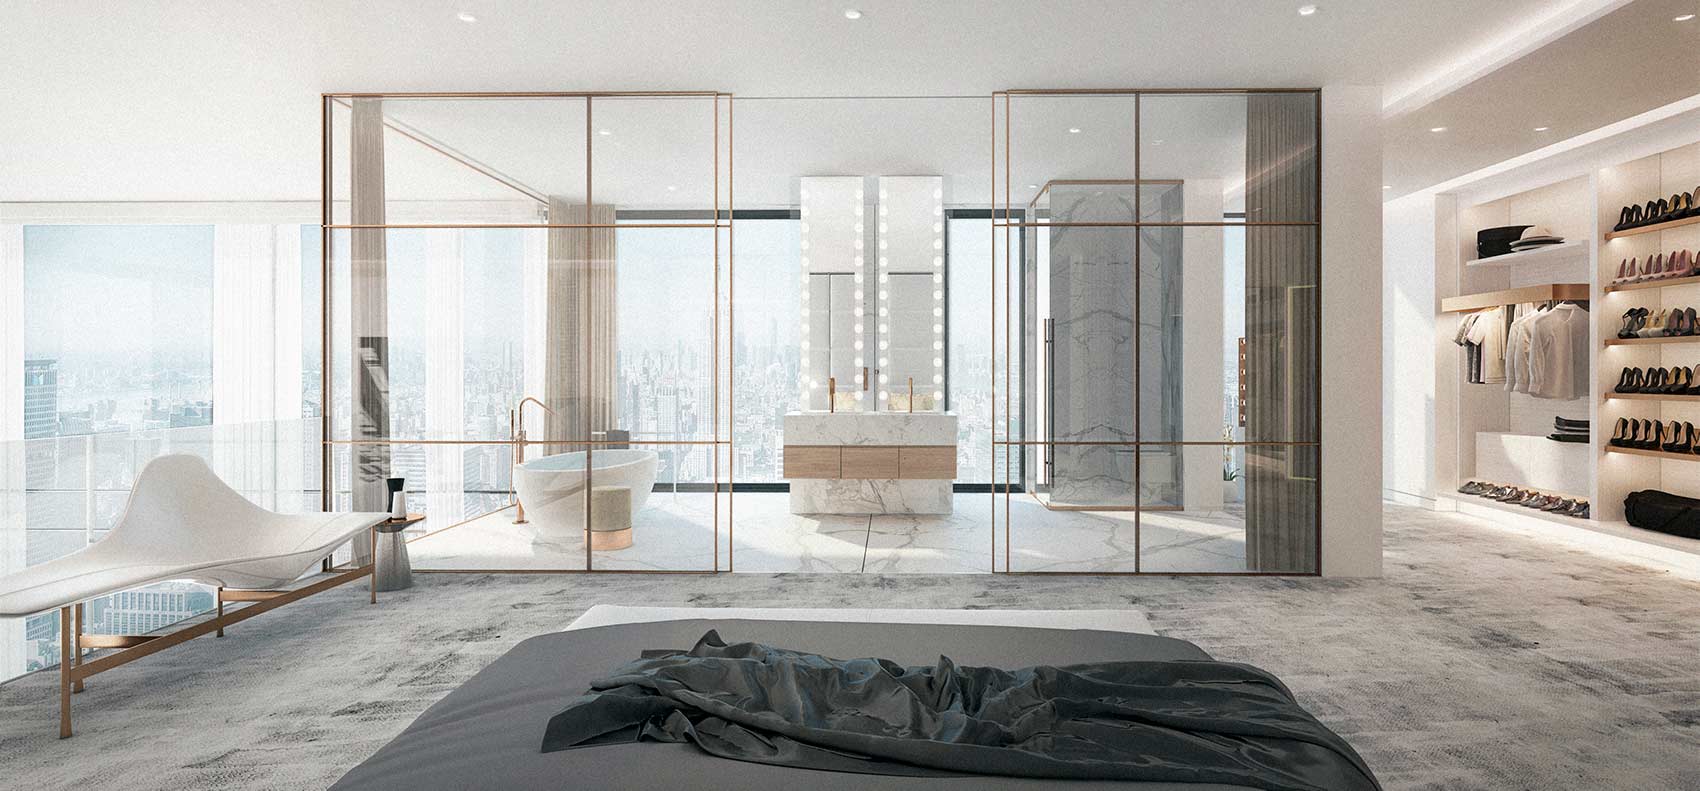 Modern Luxury Bathroom - the Art of Interior Design - Ula Burgiel